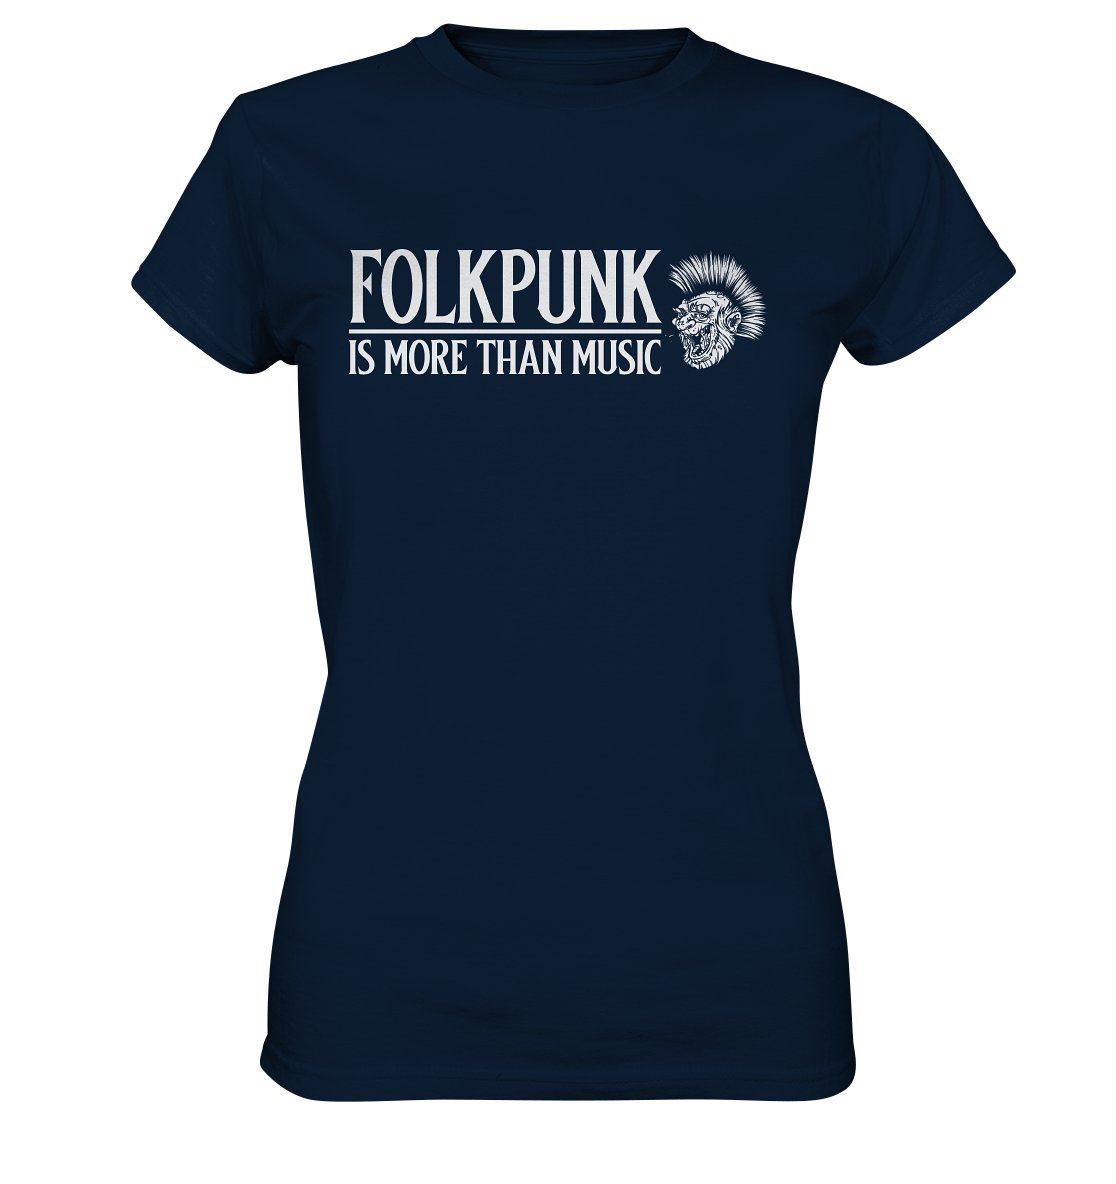 Folkpunk "Is More Than Music" - Ladies Premium Shirt